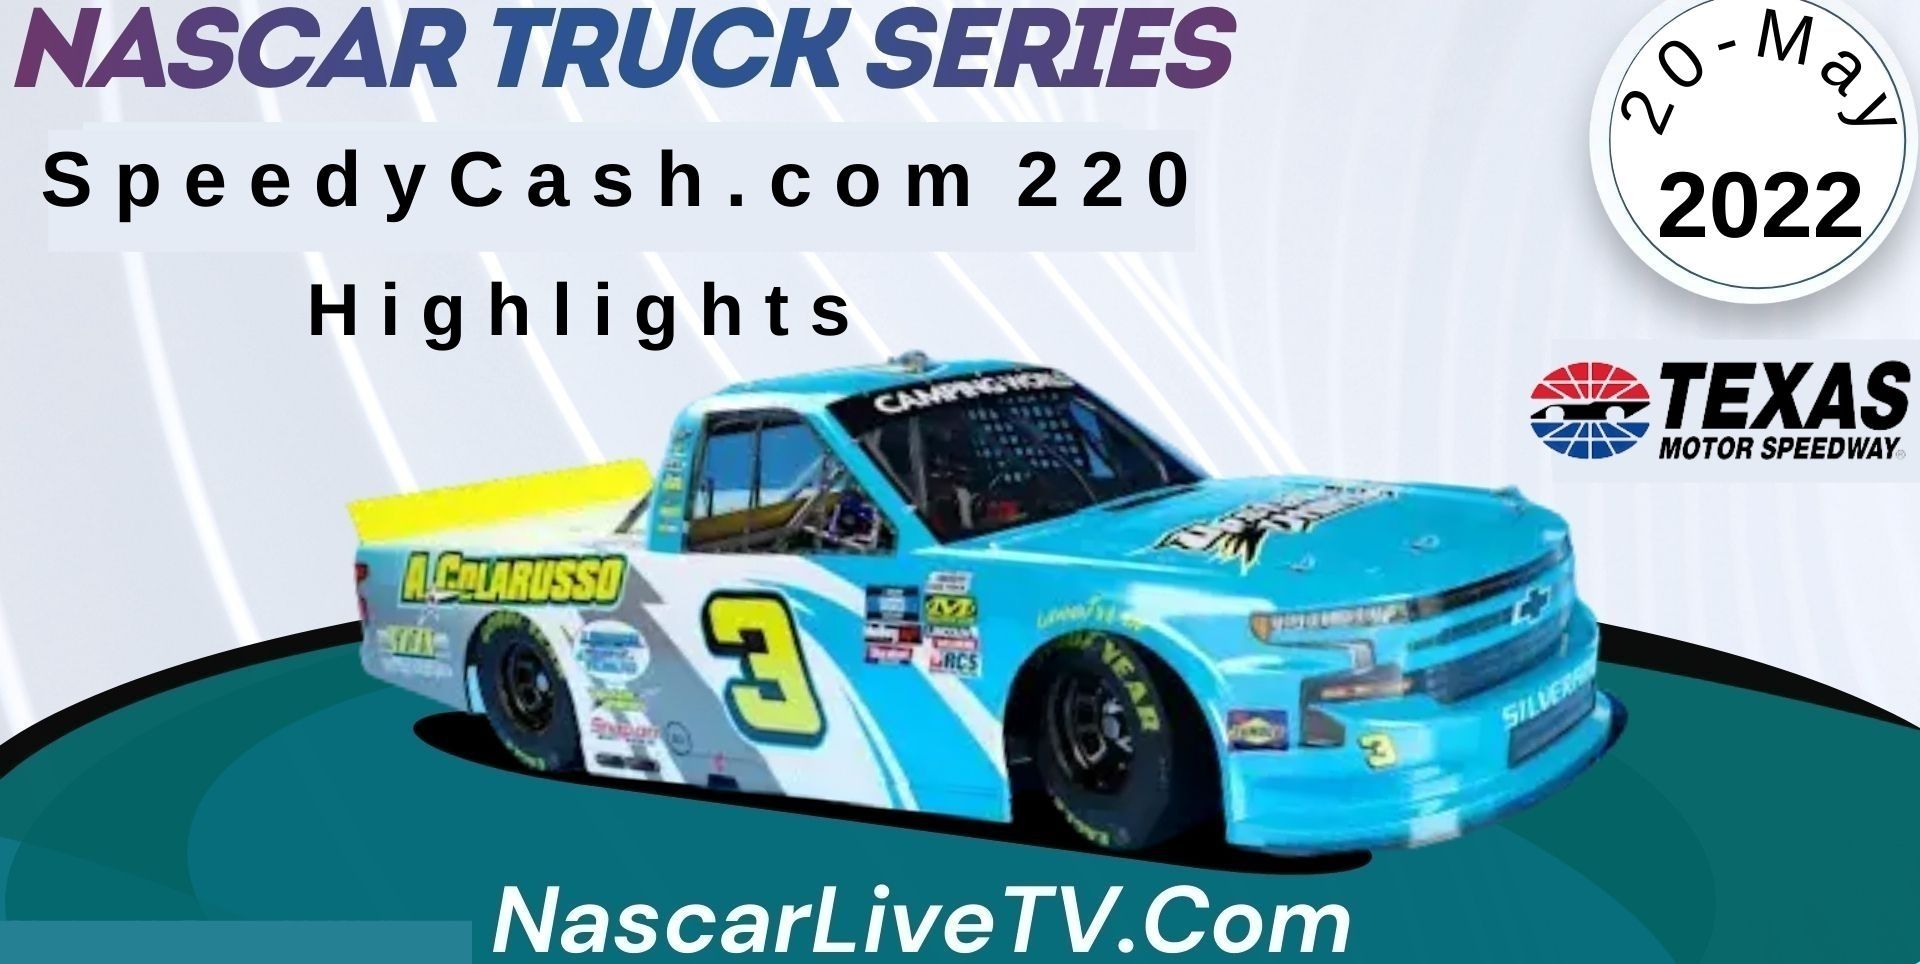 SpeedyCash Com 220 Highlights NASCAR Truck Series 2022